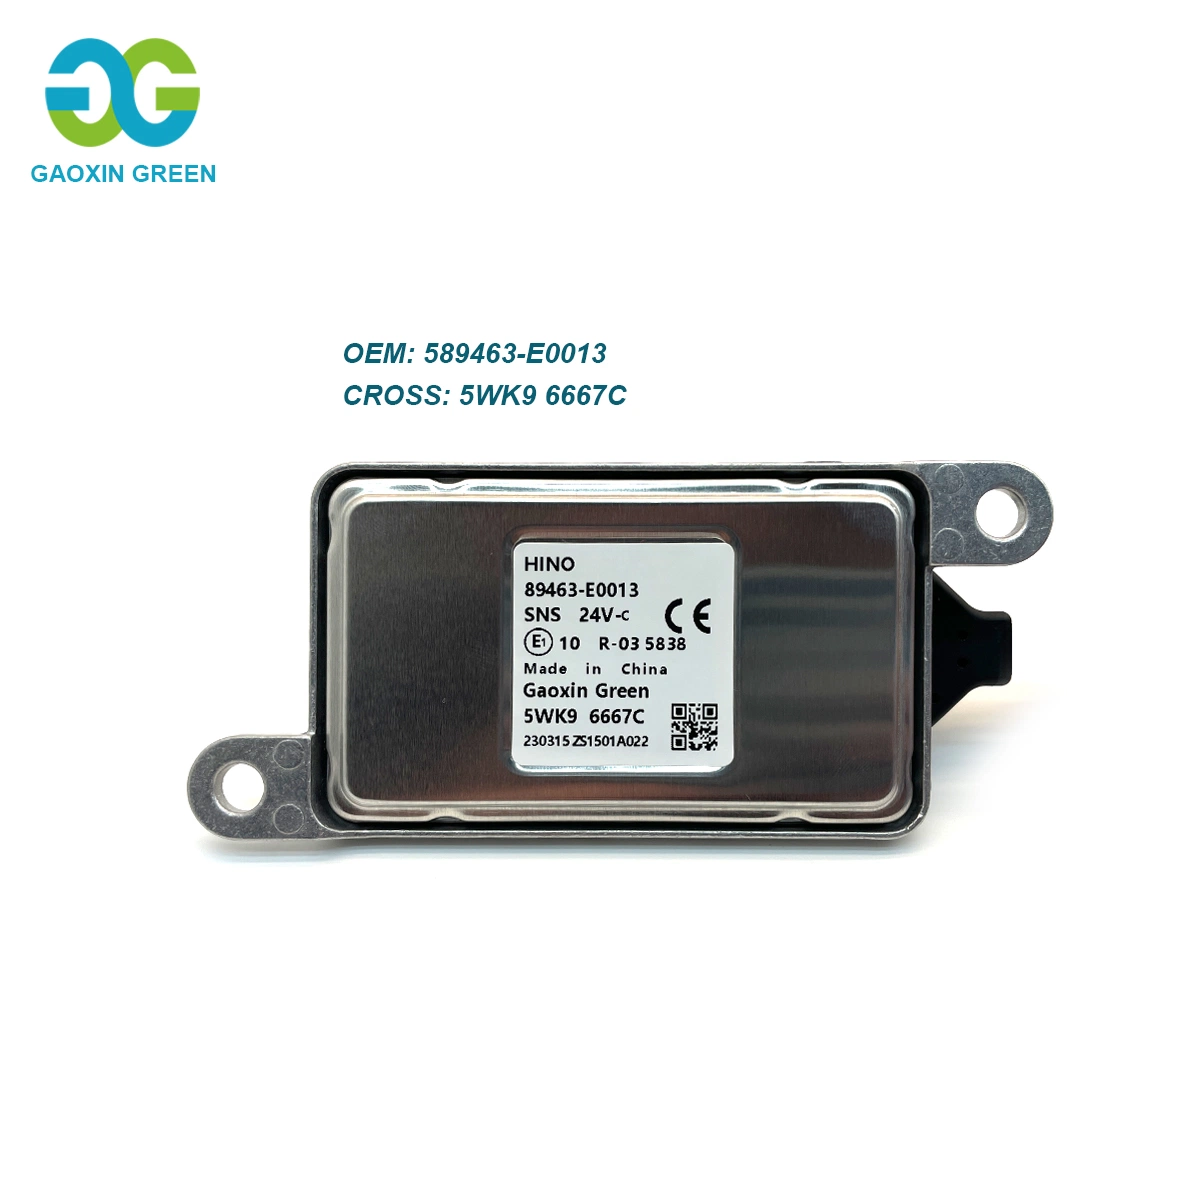 Gaoxinsens Auto Parts de nitrógeno de alta calidad del sensor de oxígeno Sensor Nox para Hino 5WK96667c 89463-E0013